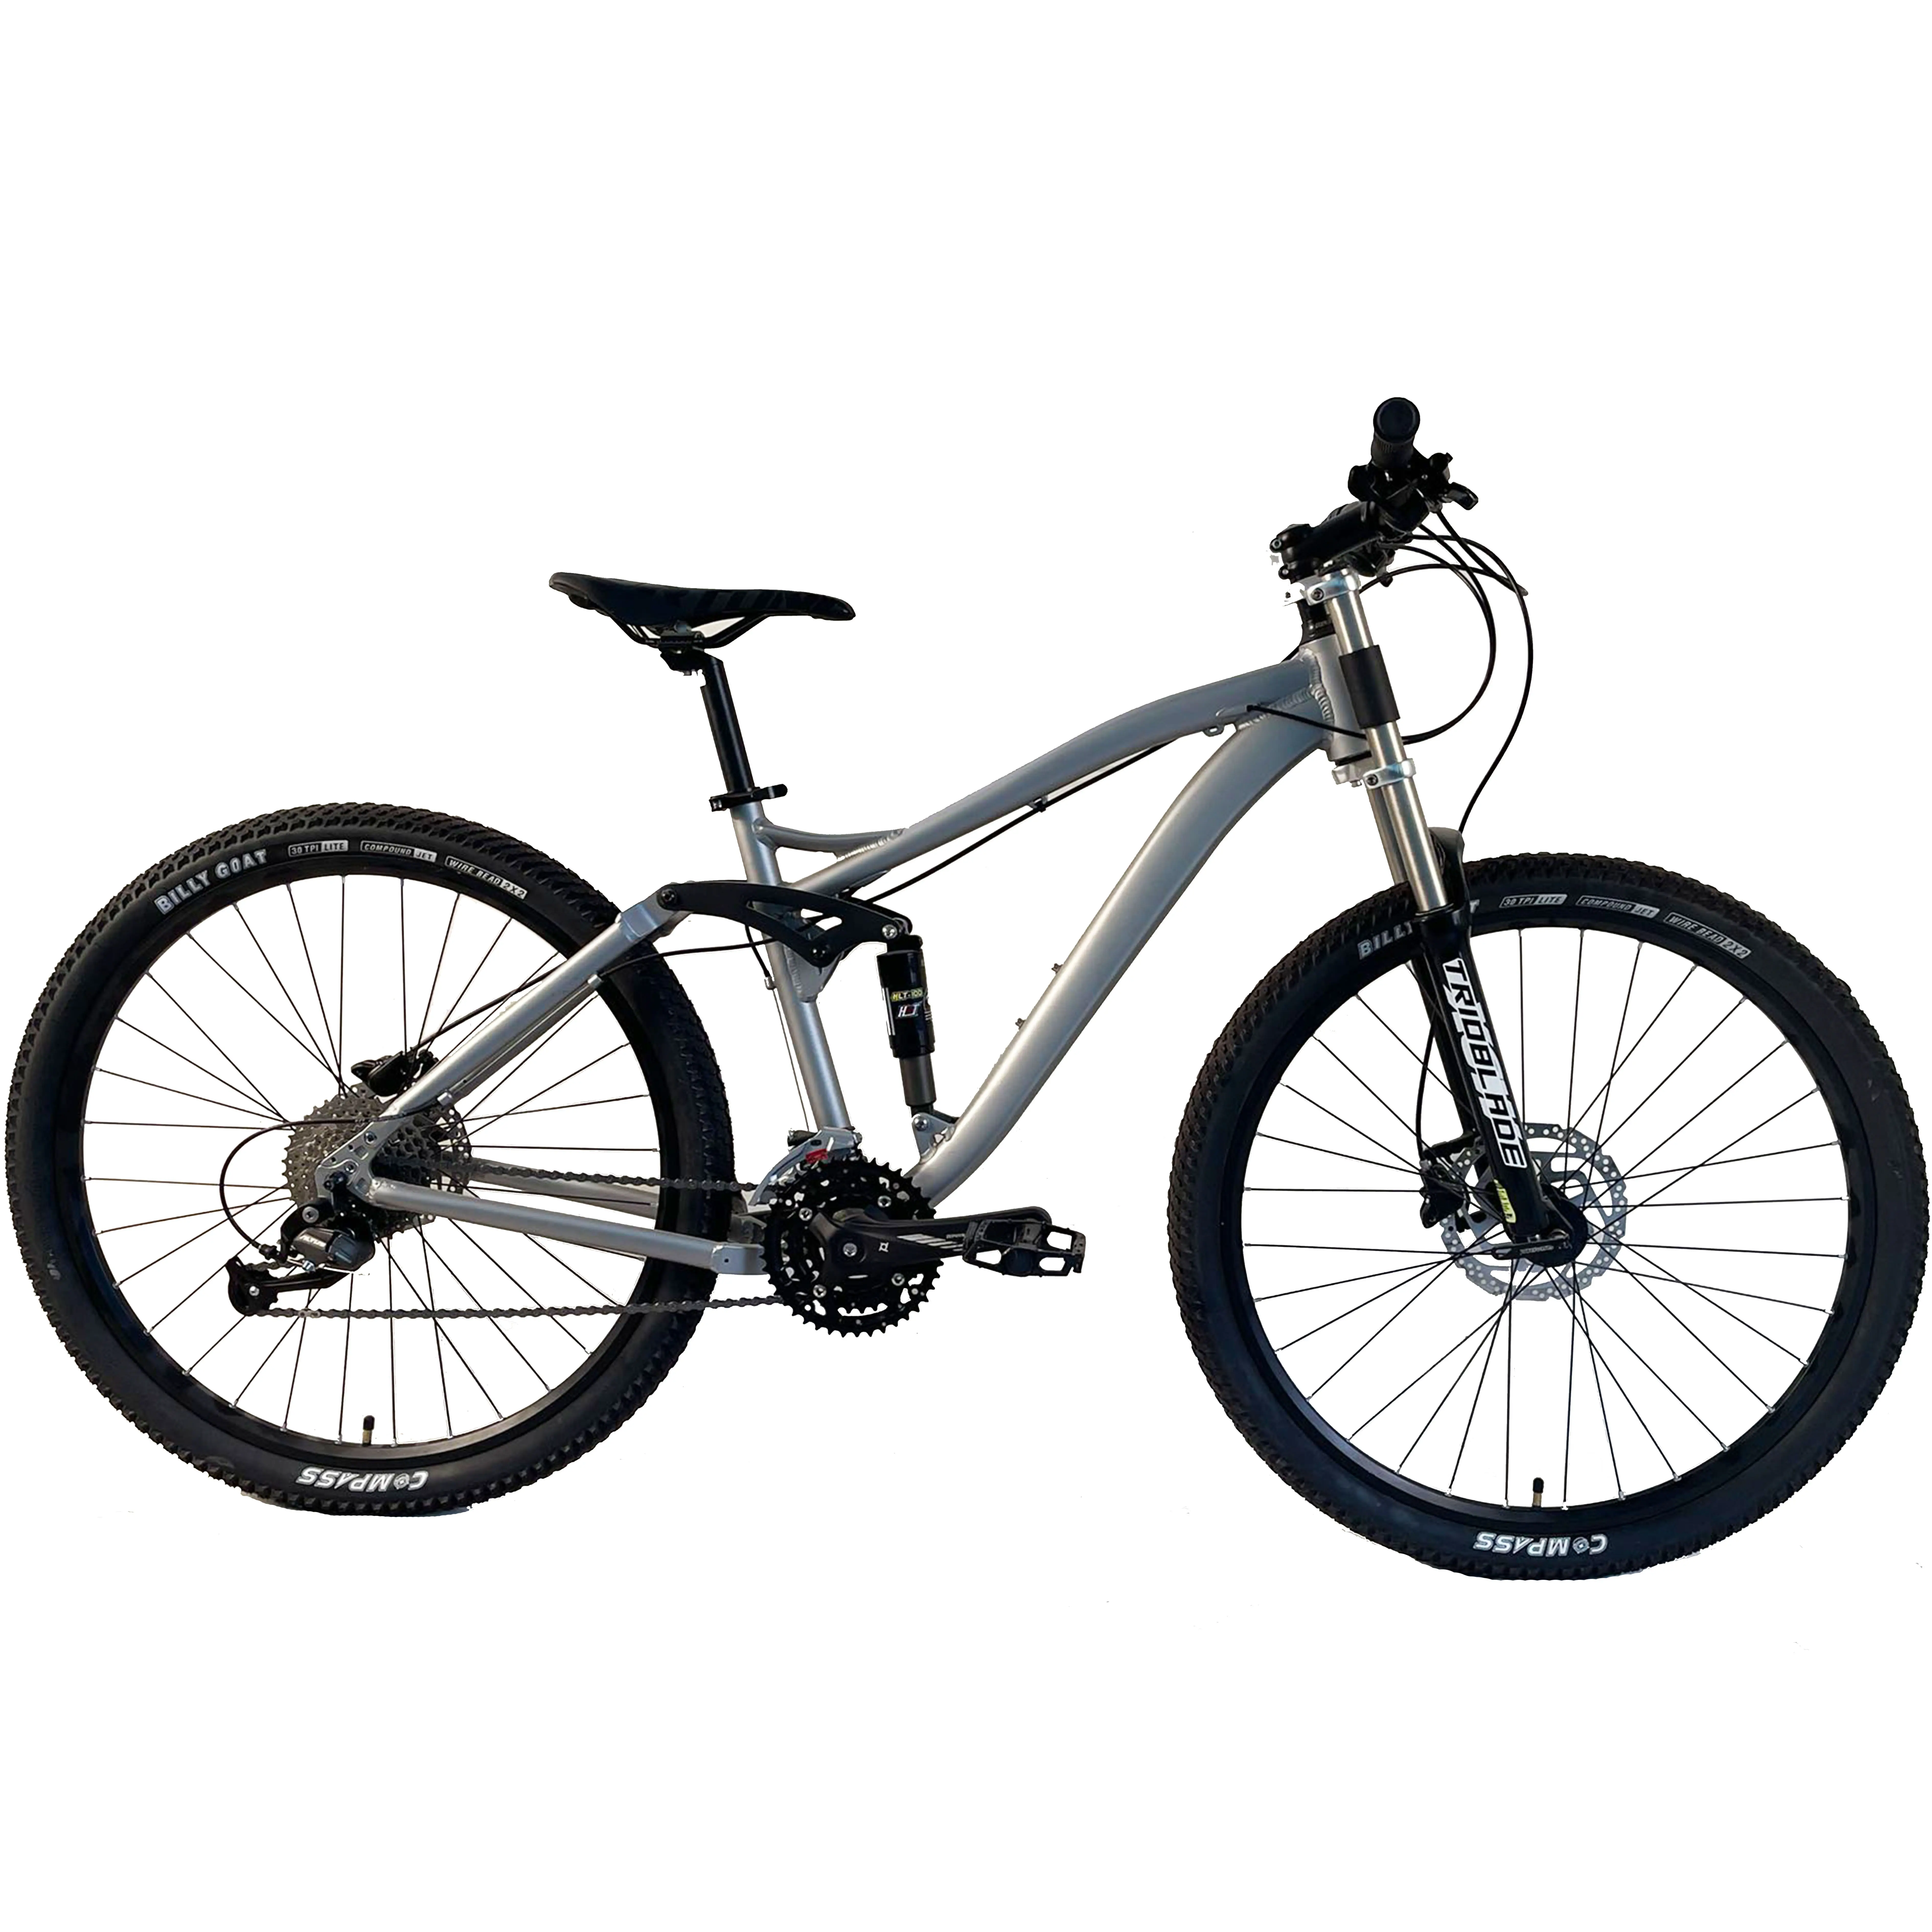 Wholesale 21 speed bicicletas bicycle mountain bike 27.5 inch mtb mountainbike 27.5 inch mountain bikes